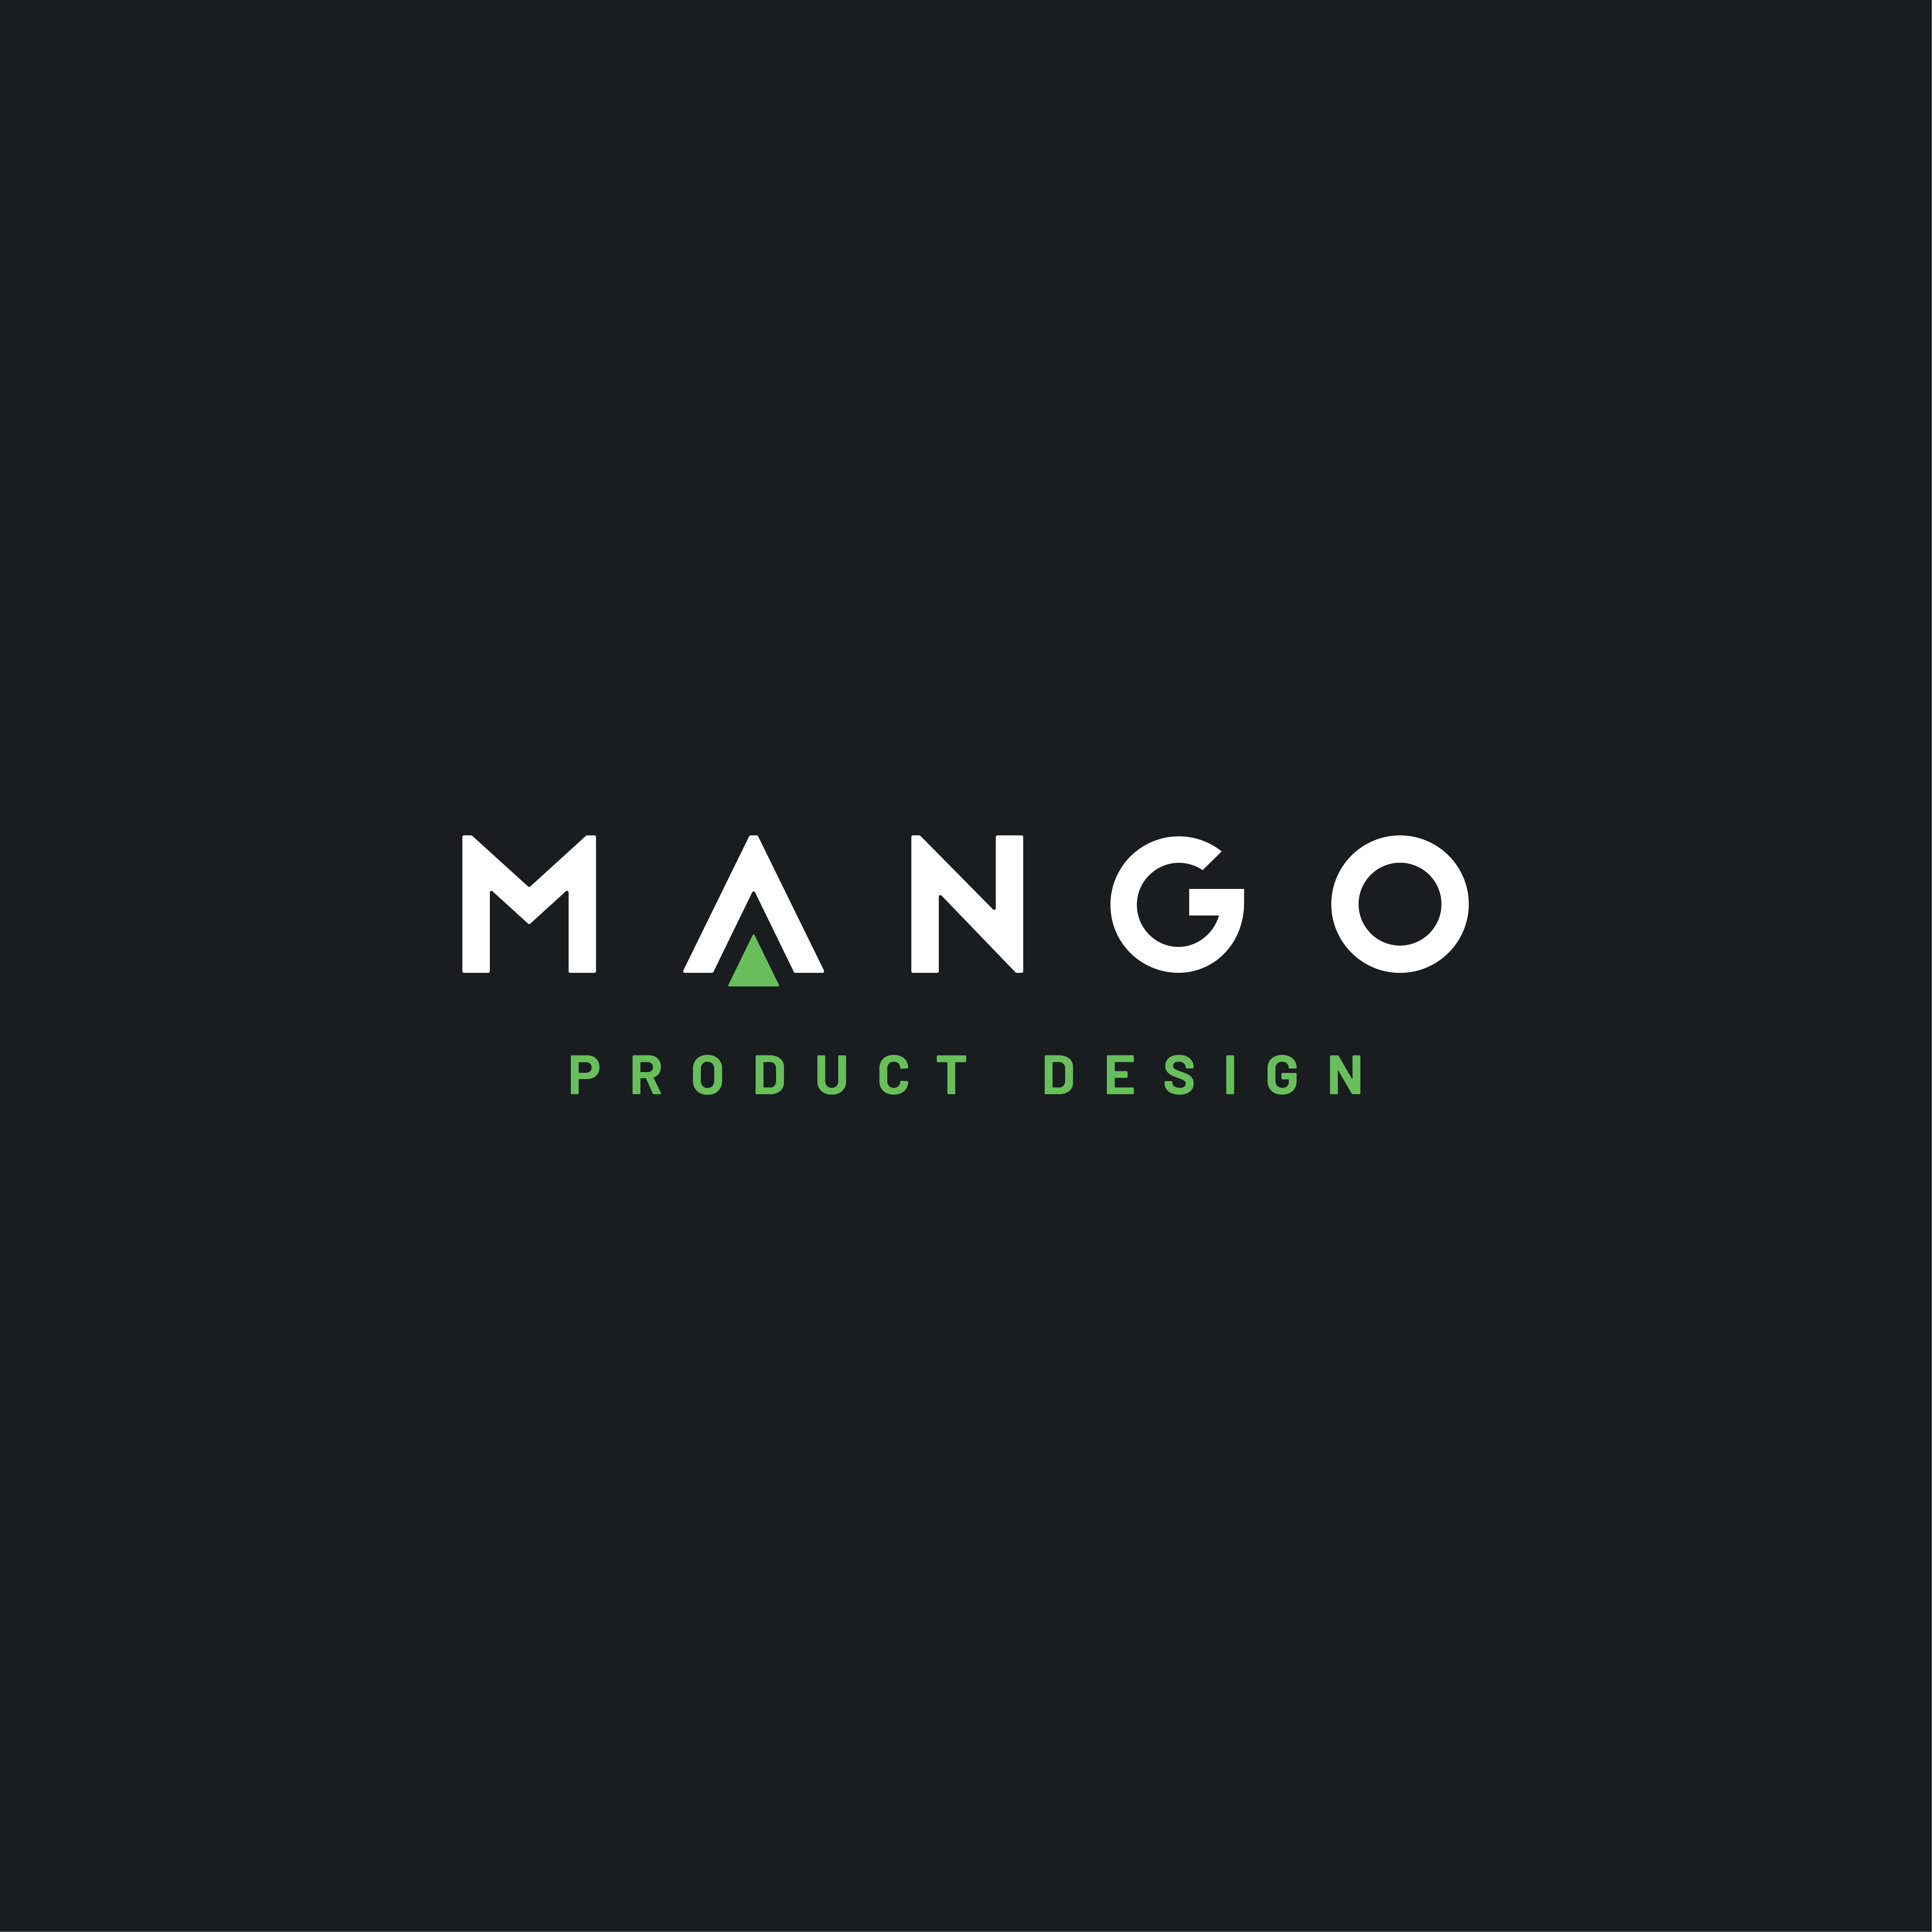 ManGo Product Design